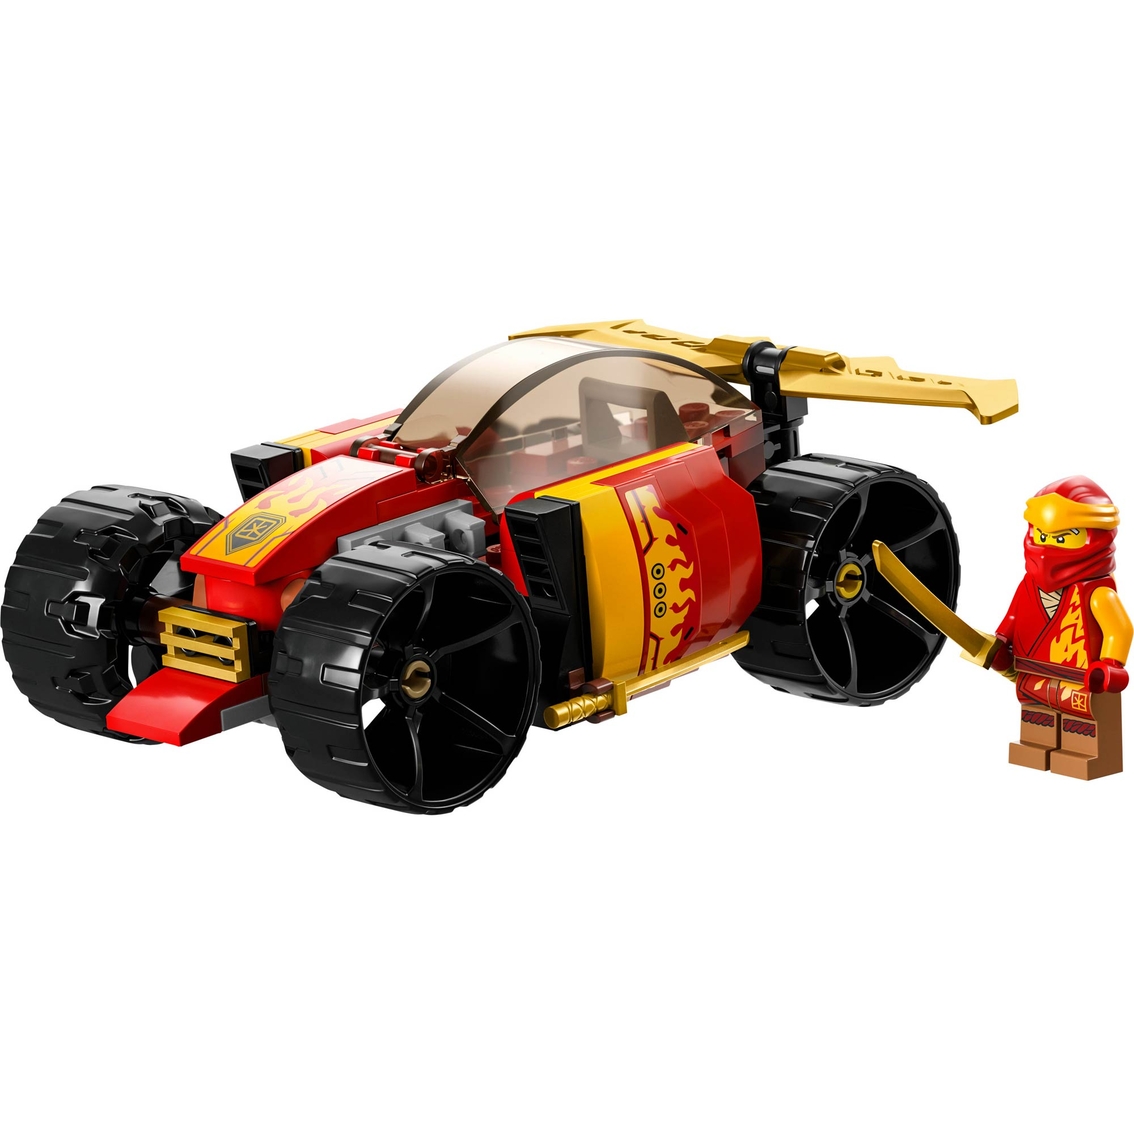 LEGO Ninjago Kai’s Ninja Race Car EVO - Image 2 of 2